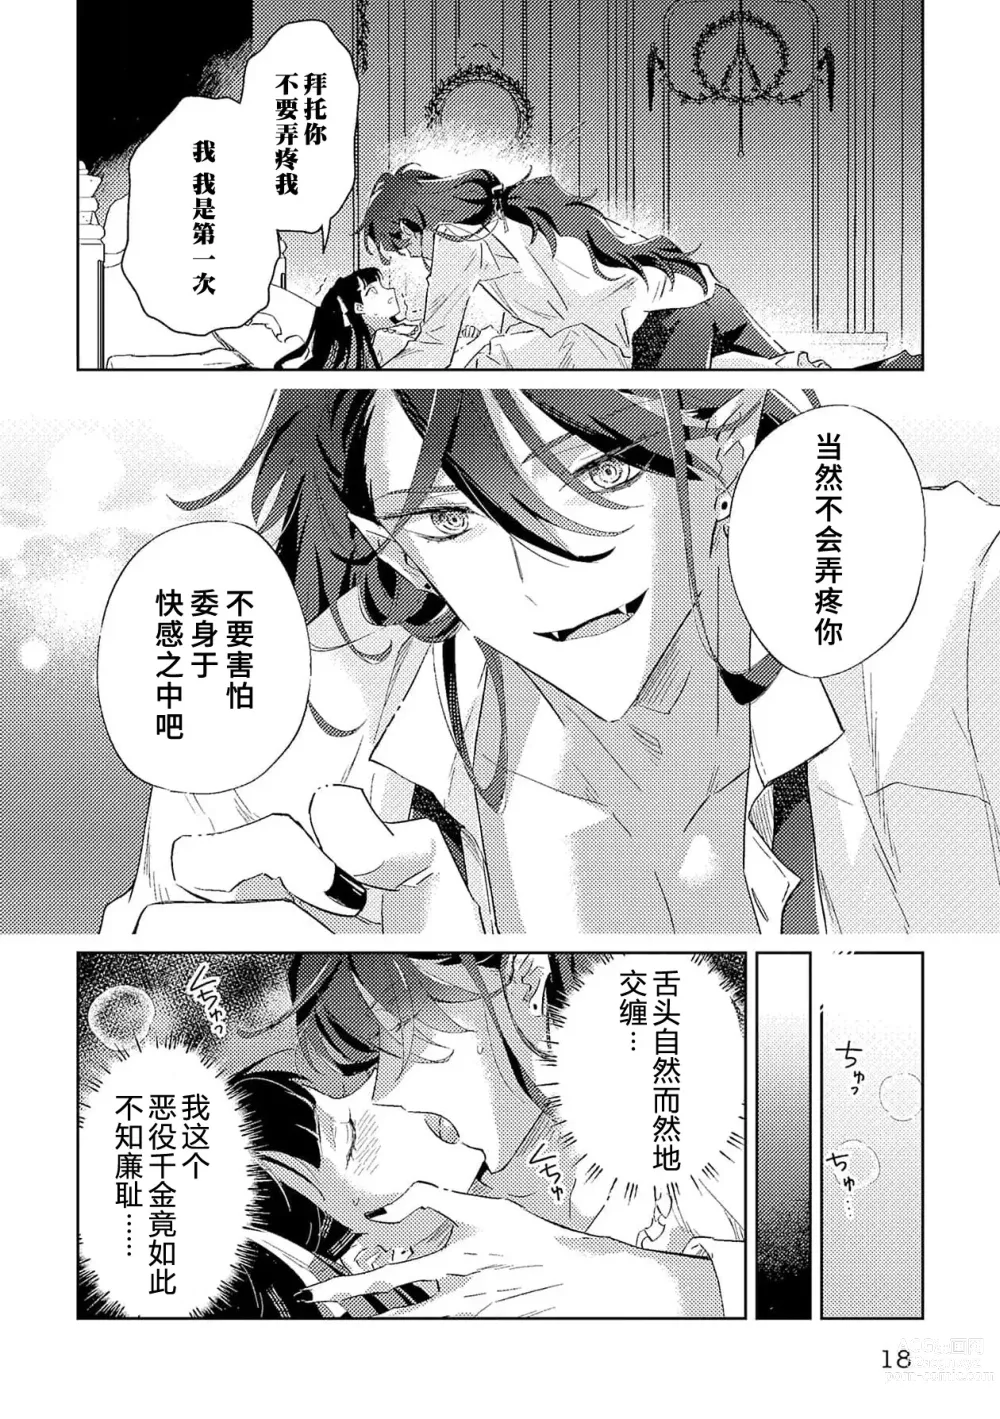 Page 18 of manga 身为恶役千金，堕落于魔界王子身下这条路线真的可以有？ 1-4